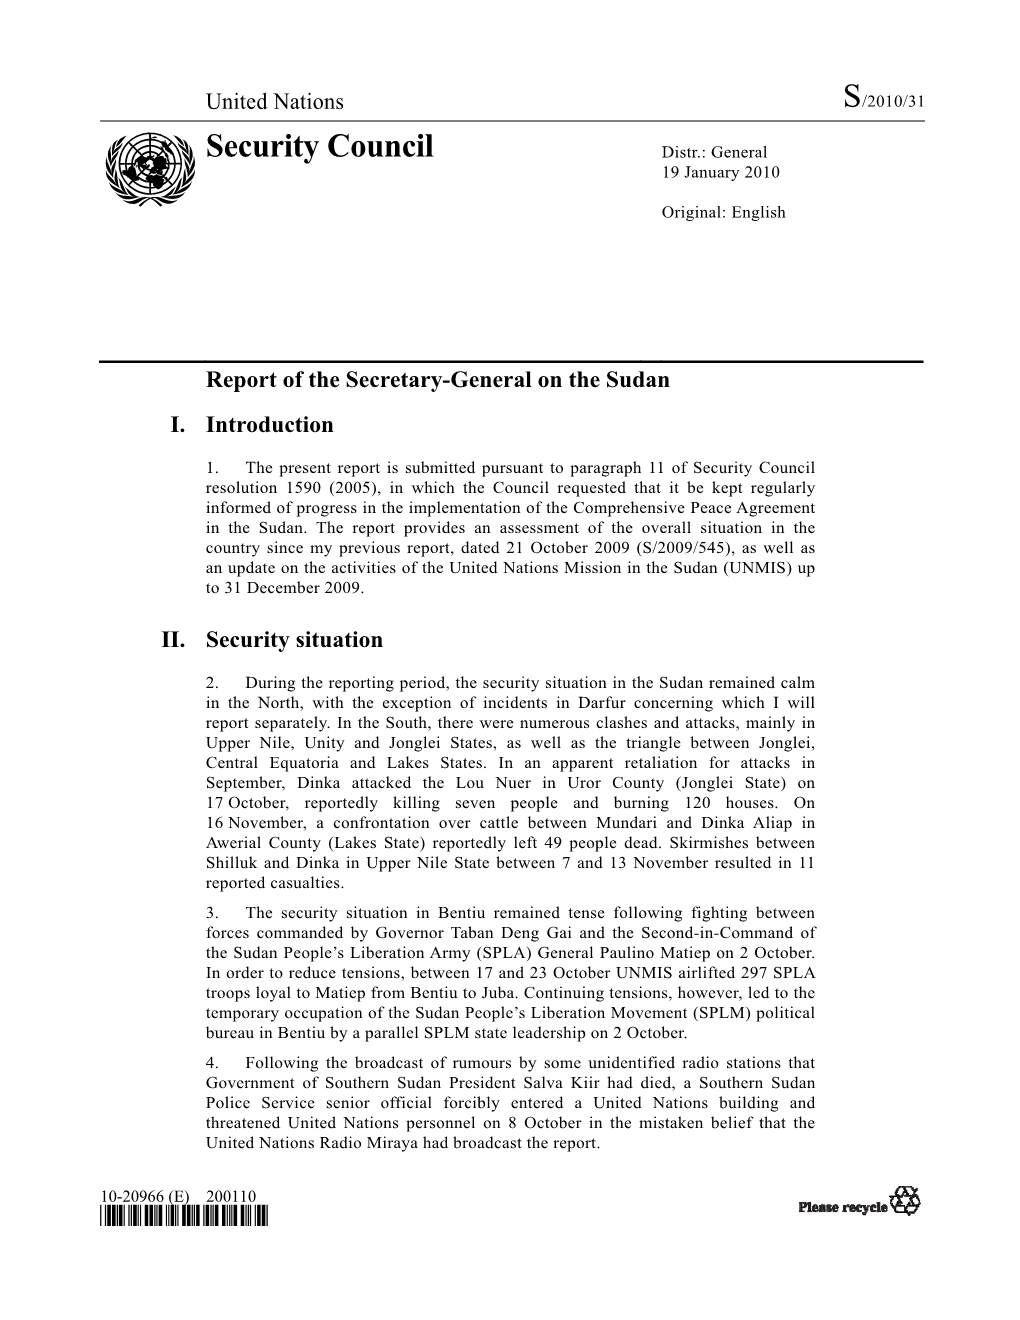 Report of the Secretary-General on the Sudan